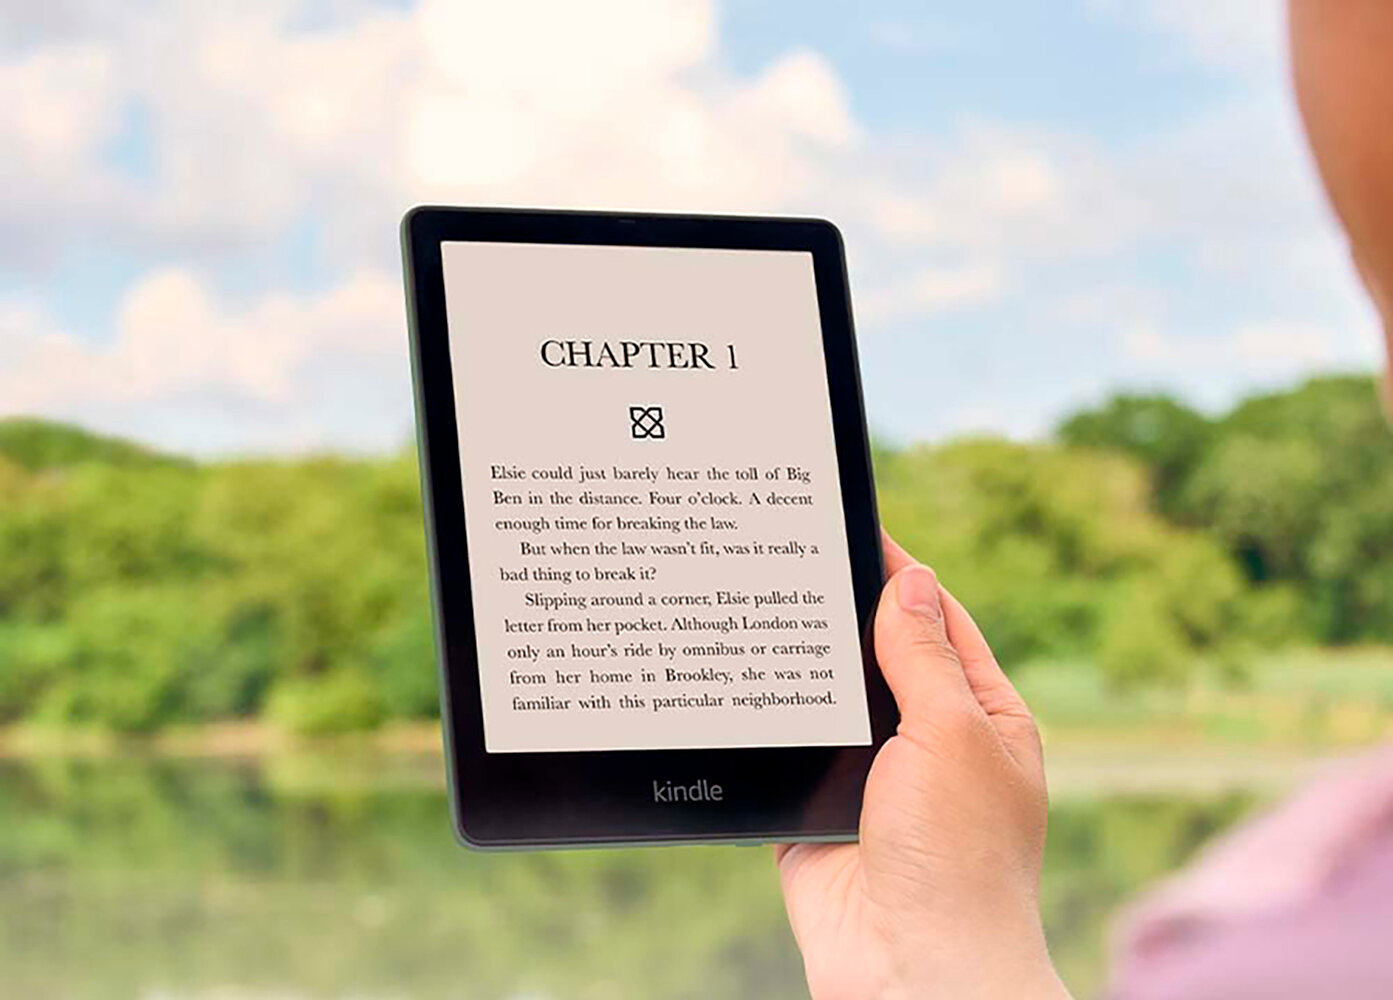 Электронная книга Amazon Kindle PaperWhite 2021 16Gb Ad-Supported Agave Green с обложкой ReaderONE PaperWhite 2021 Black